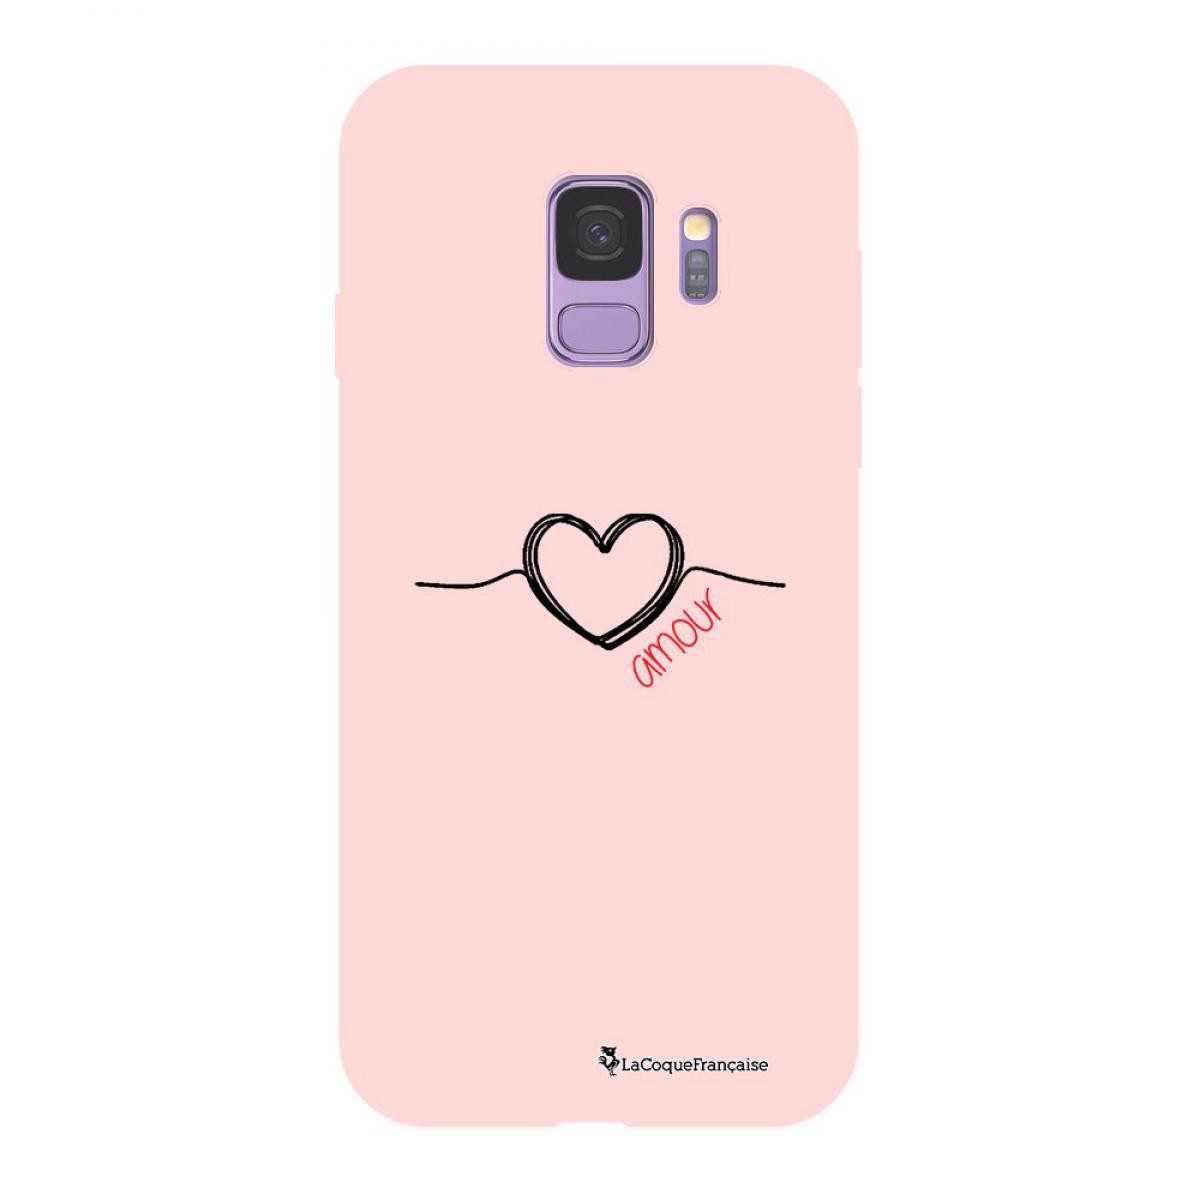 La Coque Francaise - Coque Samsung Galaxy S9 Silicone Liquide Douce rose Coeur Noir Amour La Coque Francaise. - Coque, étui smartphone